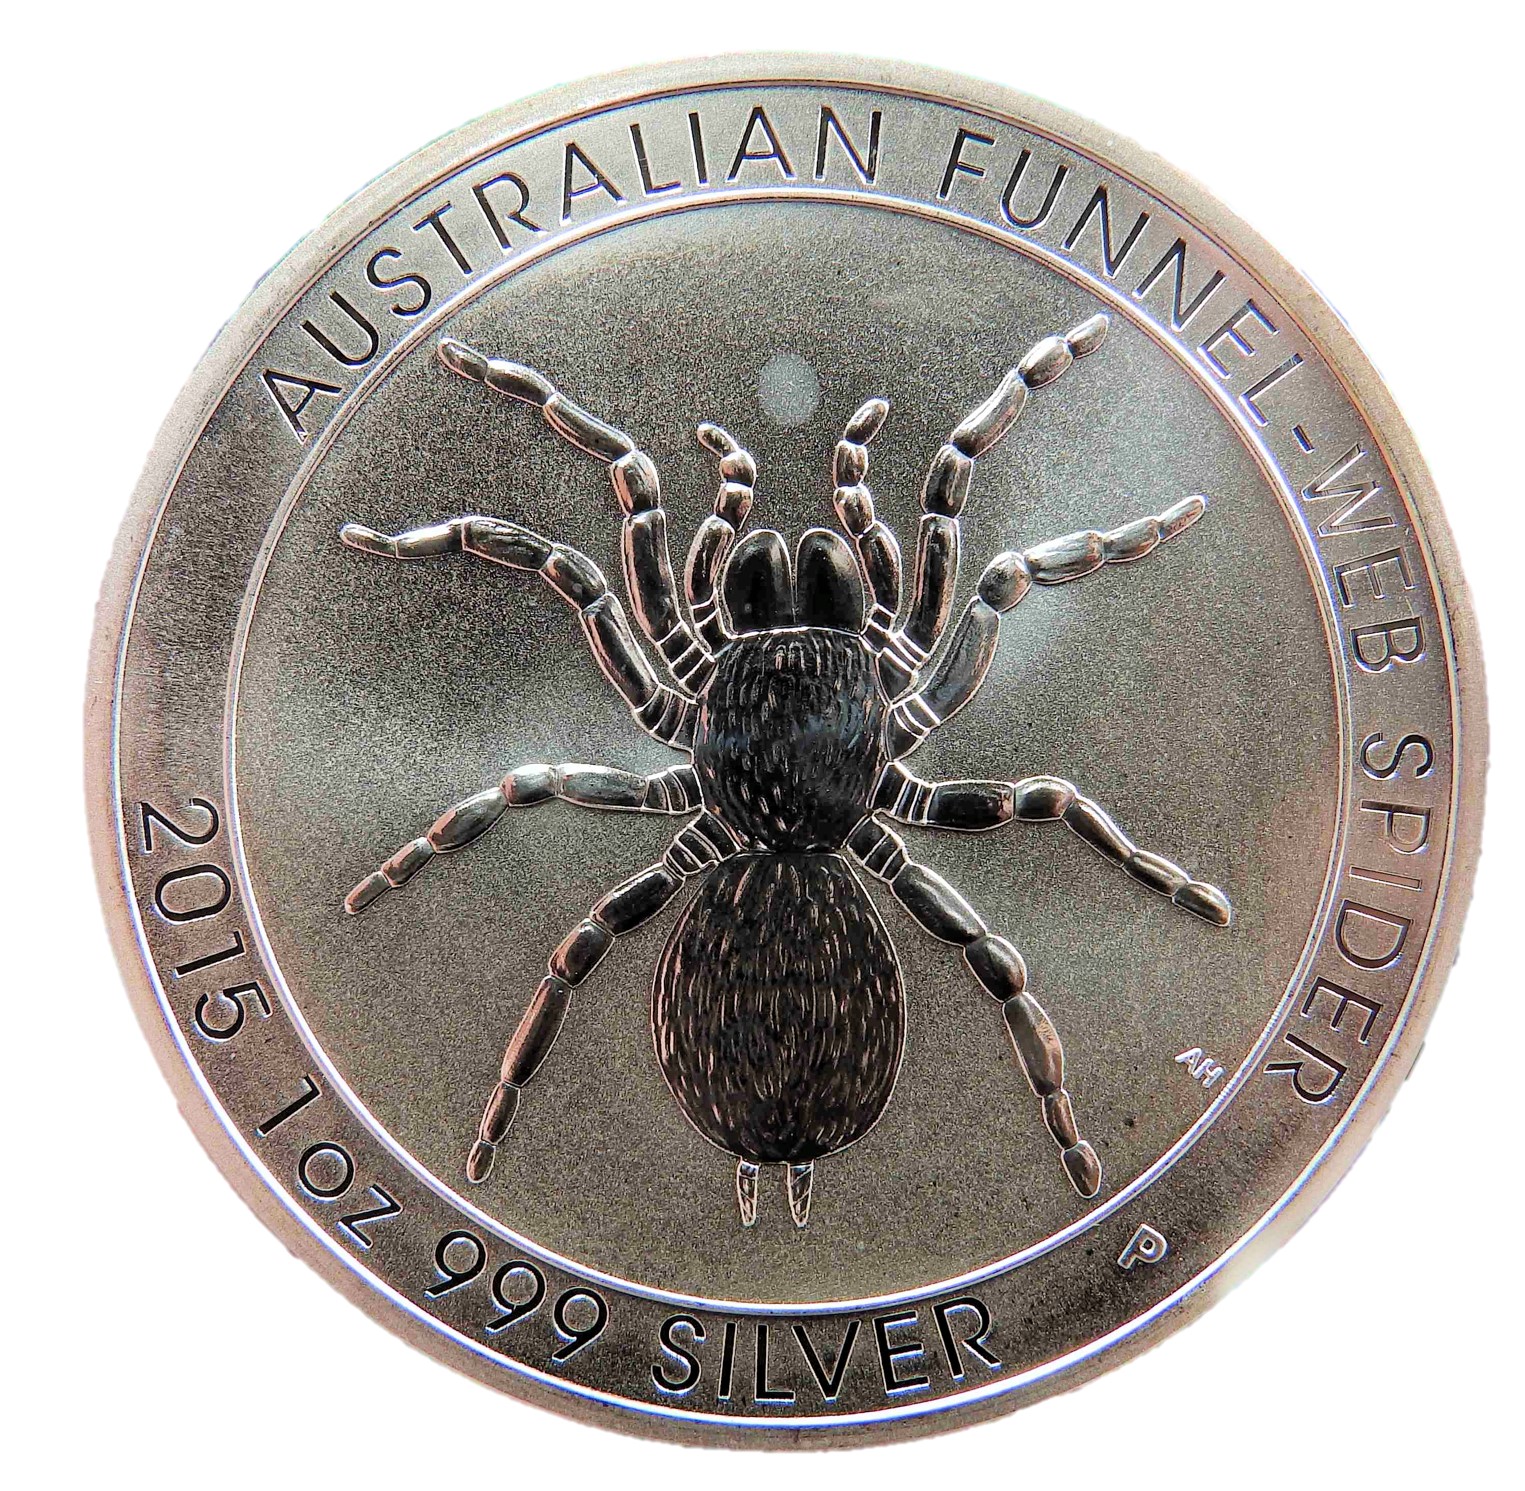 Jeff Australia dollar 2015 rev 2.jpg